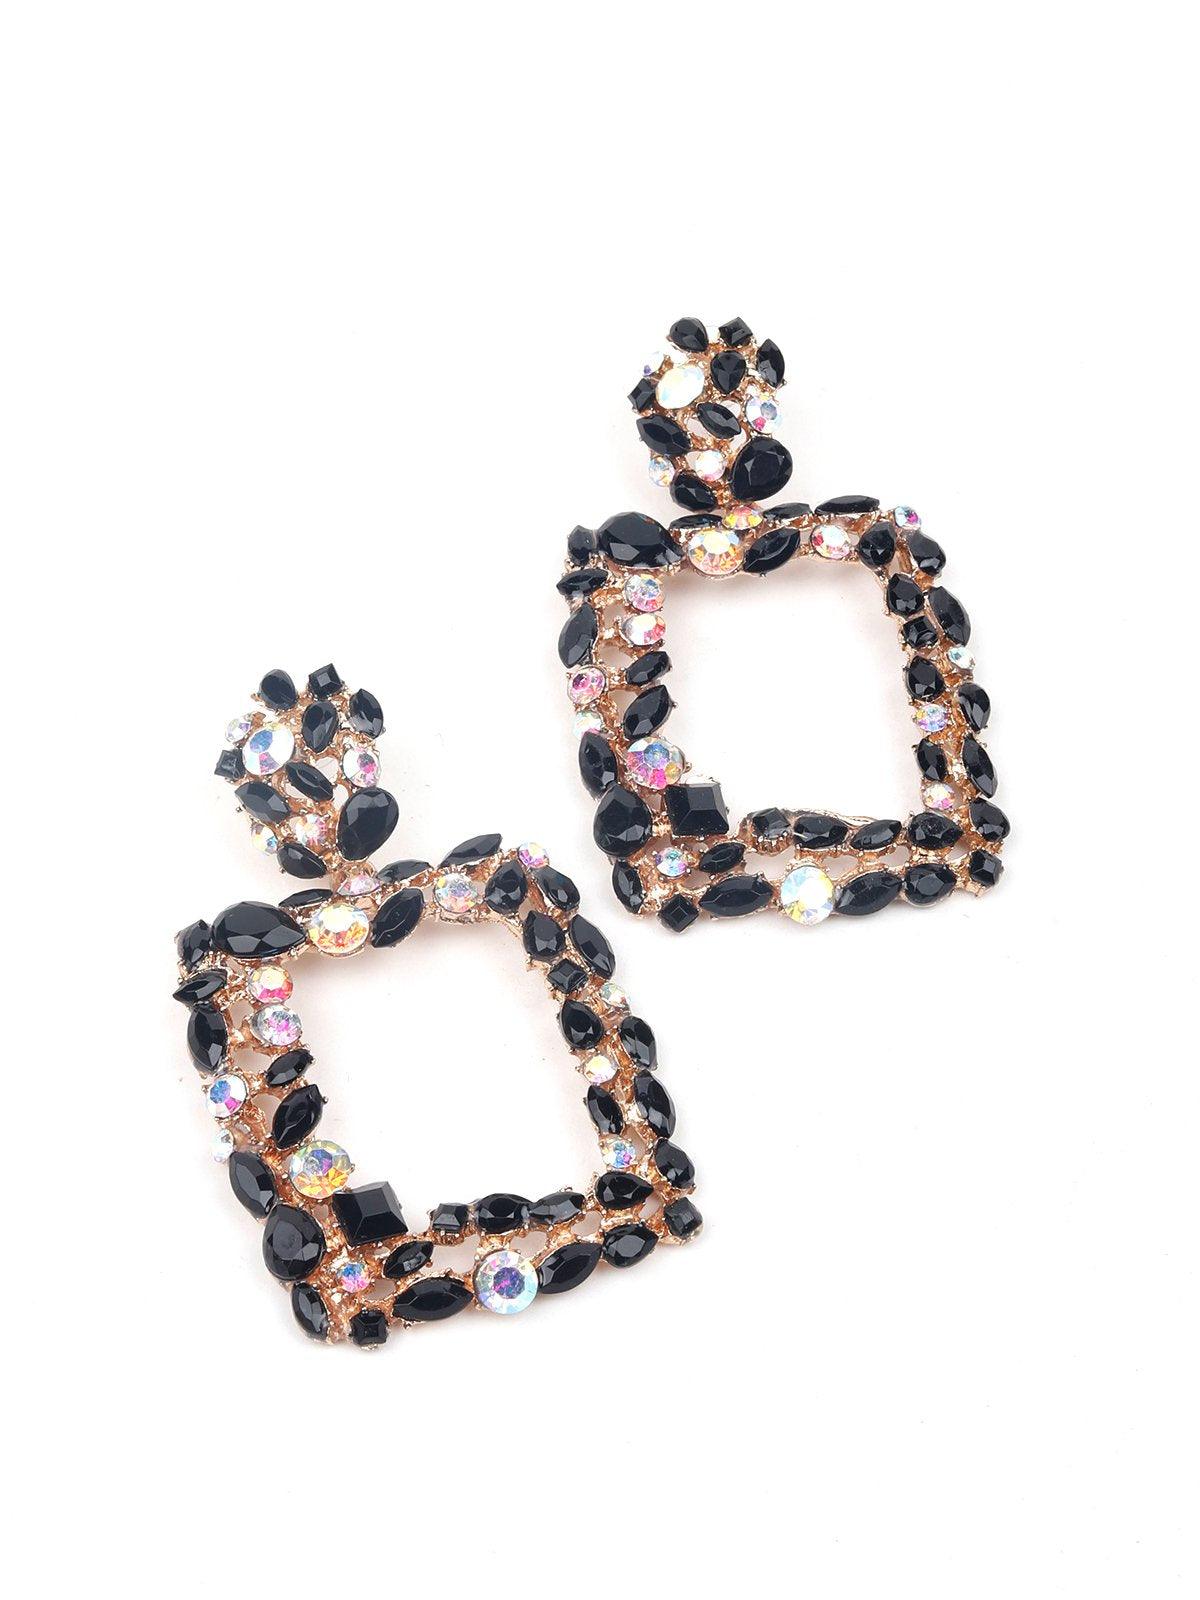 Women's Gold-Toned Black & White Studded Square Drop Earrings - Odette